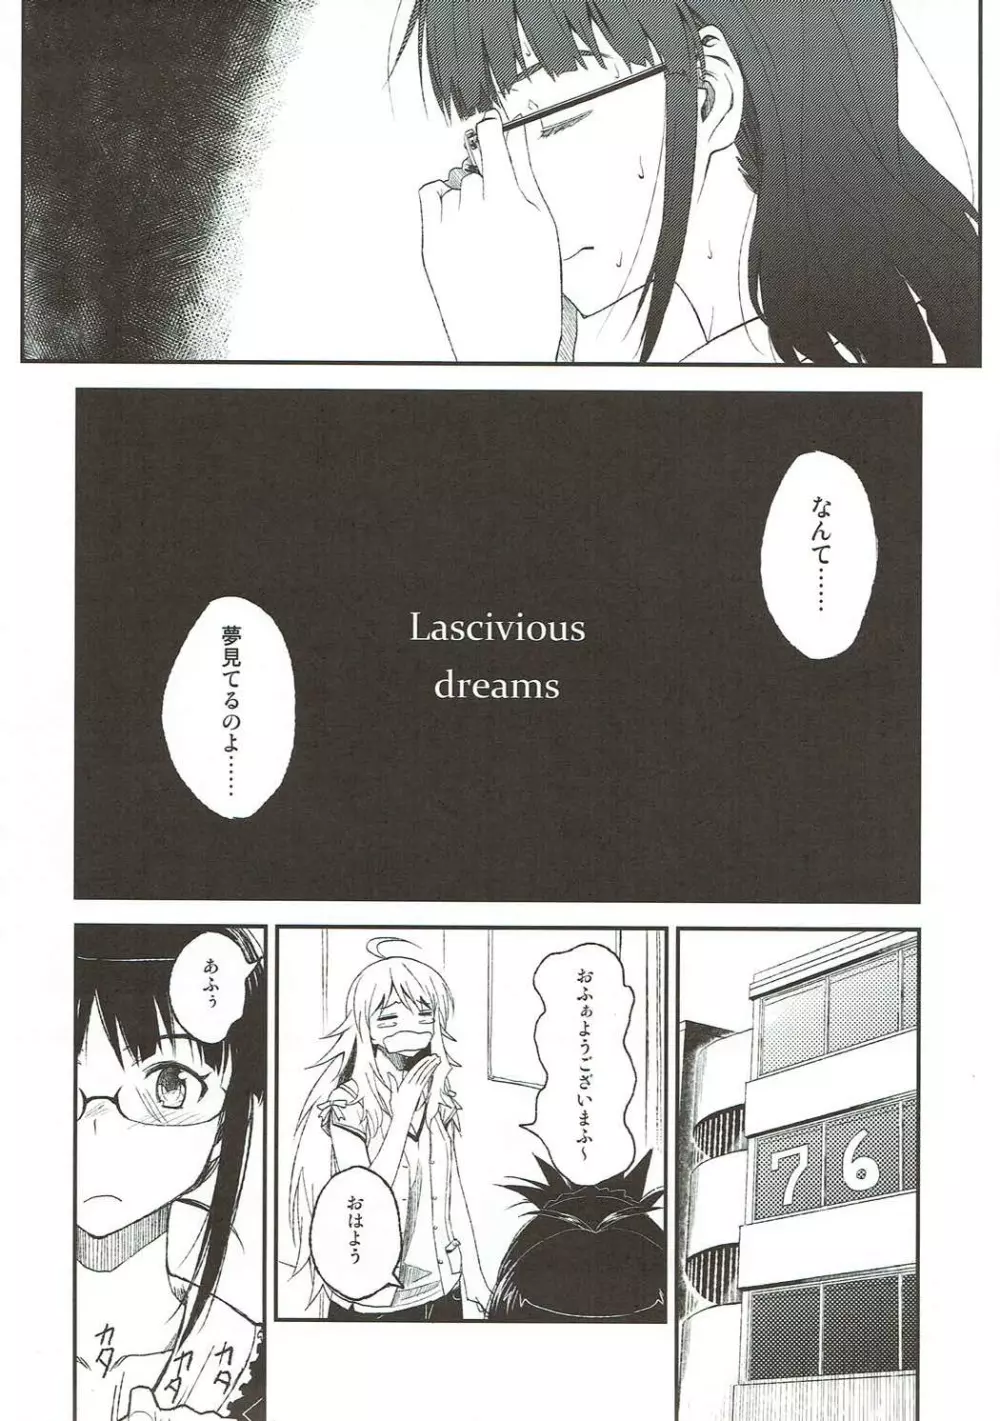 Lascivious dreams - page4